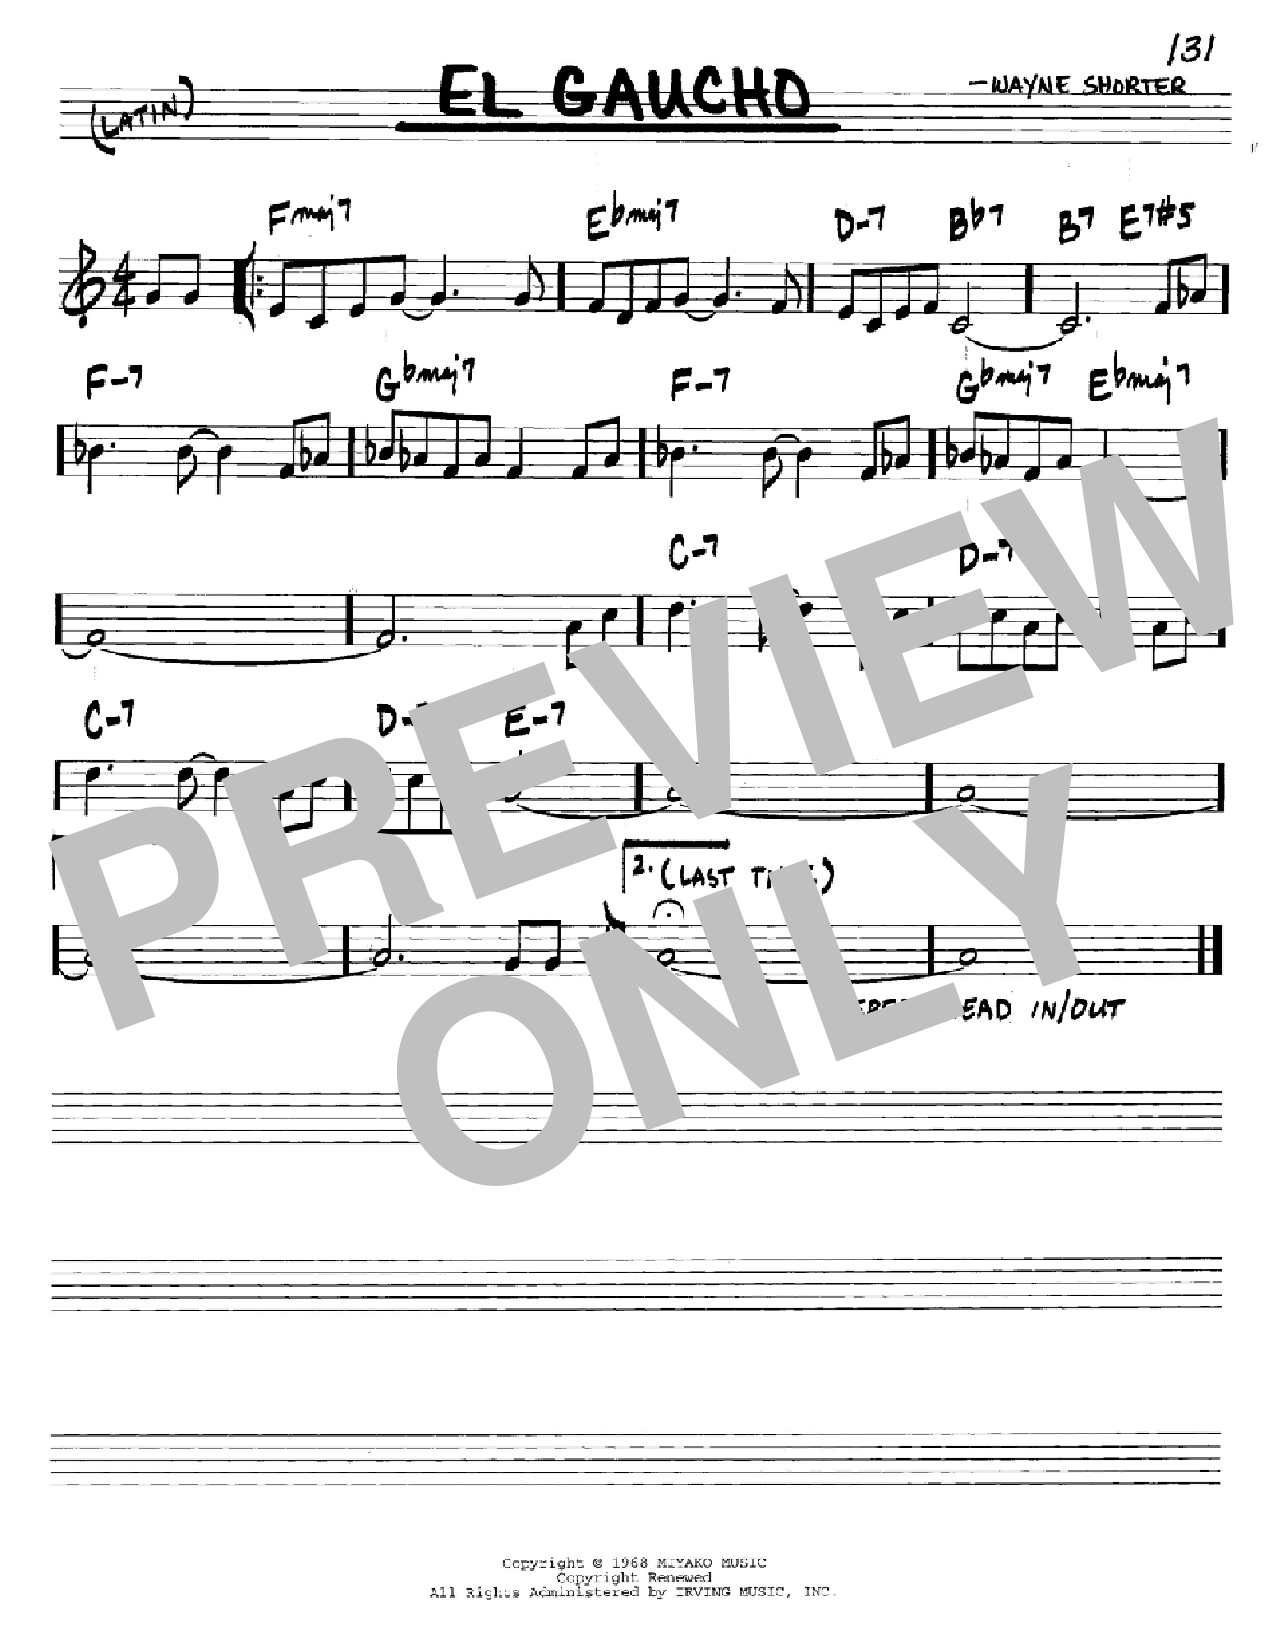 Wayne Shorter El Gaucho Sheet Music Notes & Chords for Real Book - Melody & Chords - Bass Clef Instruments - Download or Print PDF